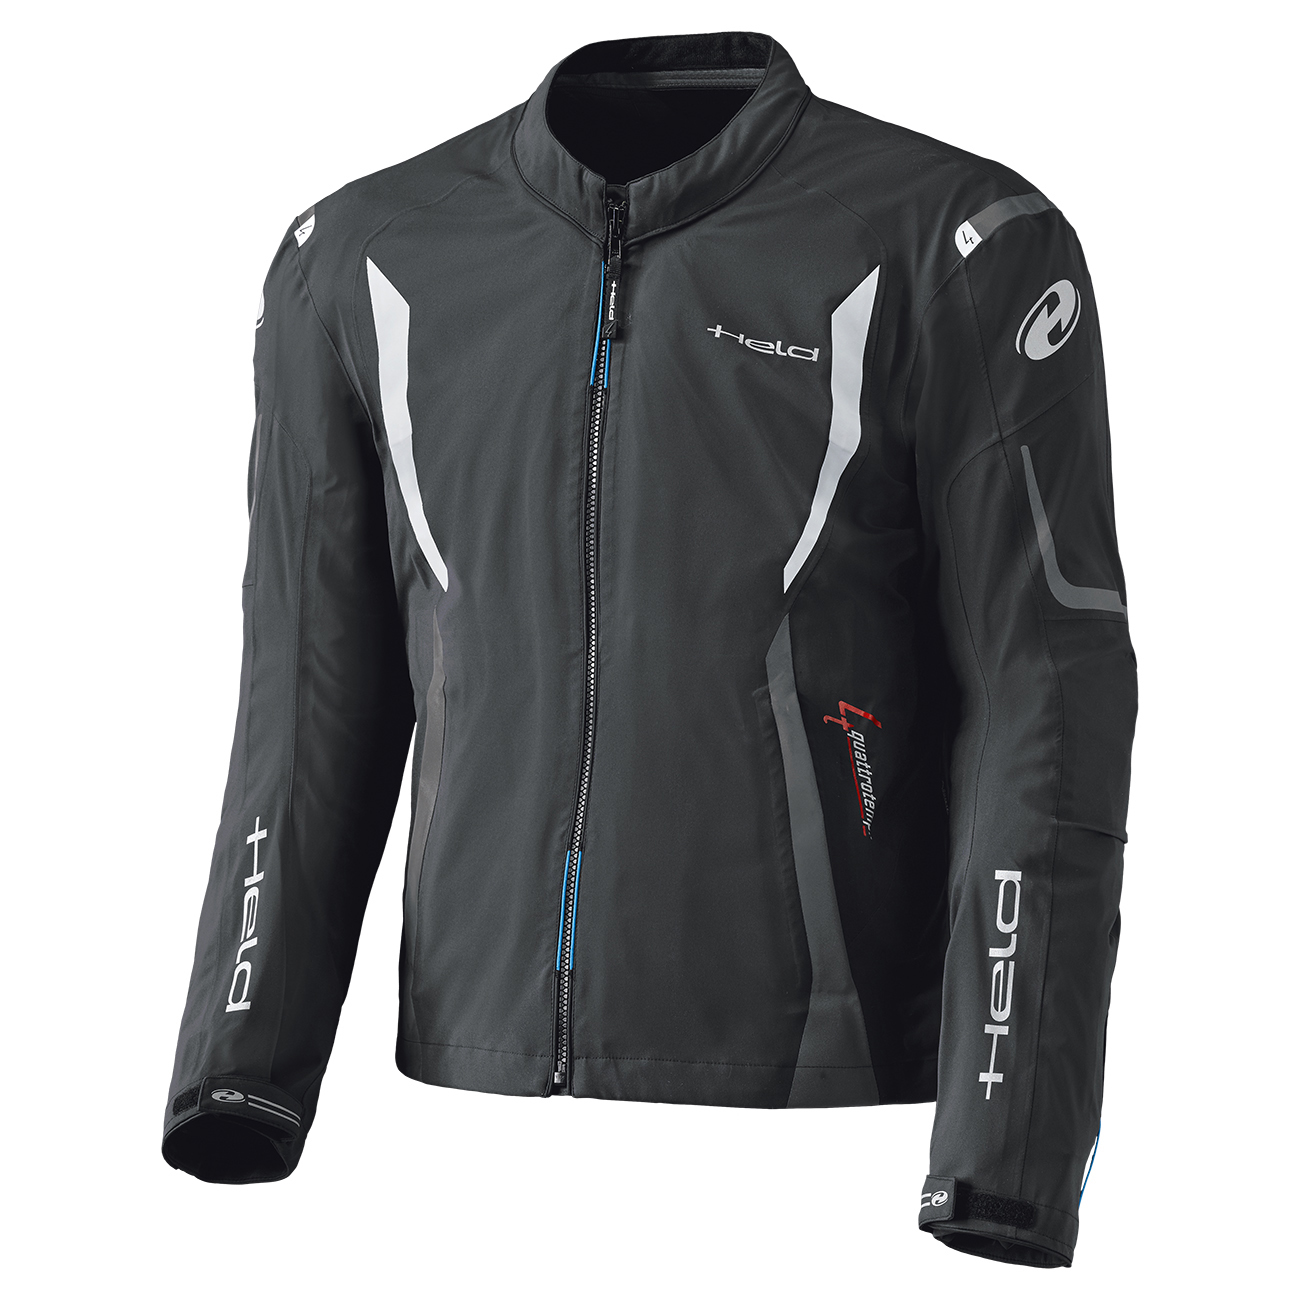 Clip-in GTX TOP GORE-TEX® Packlite jacket